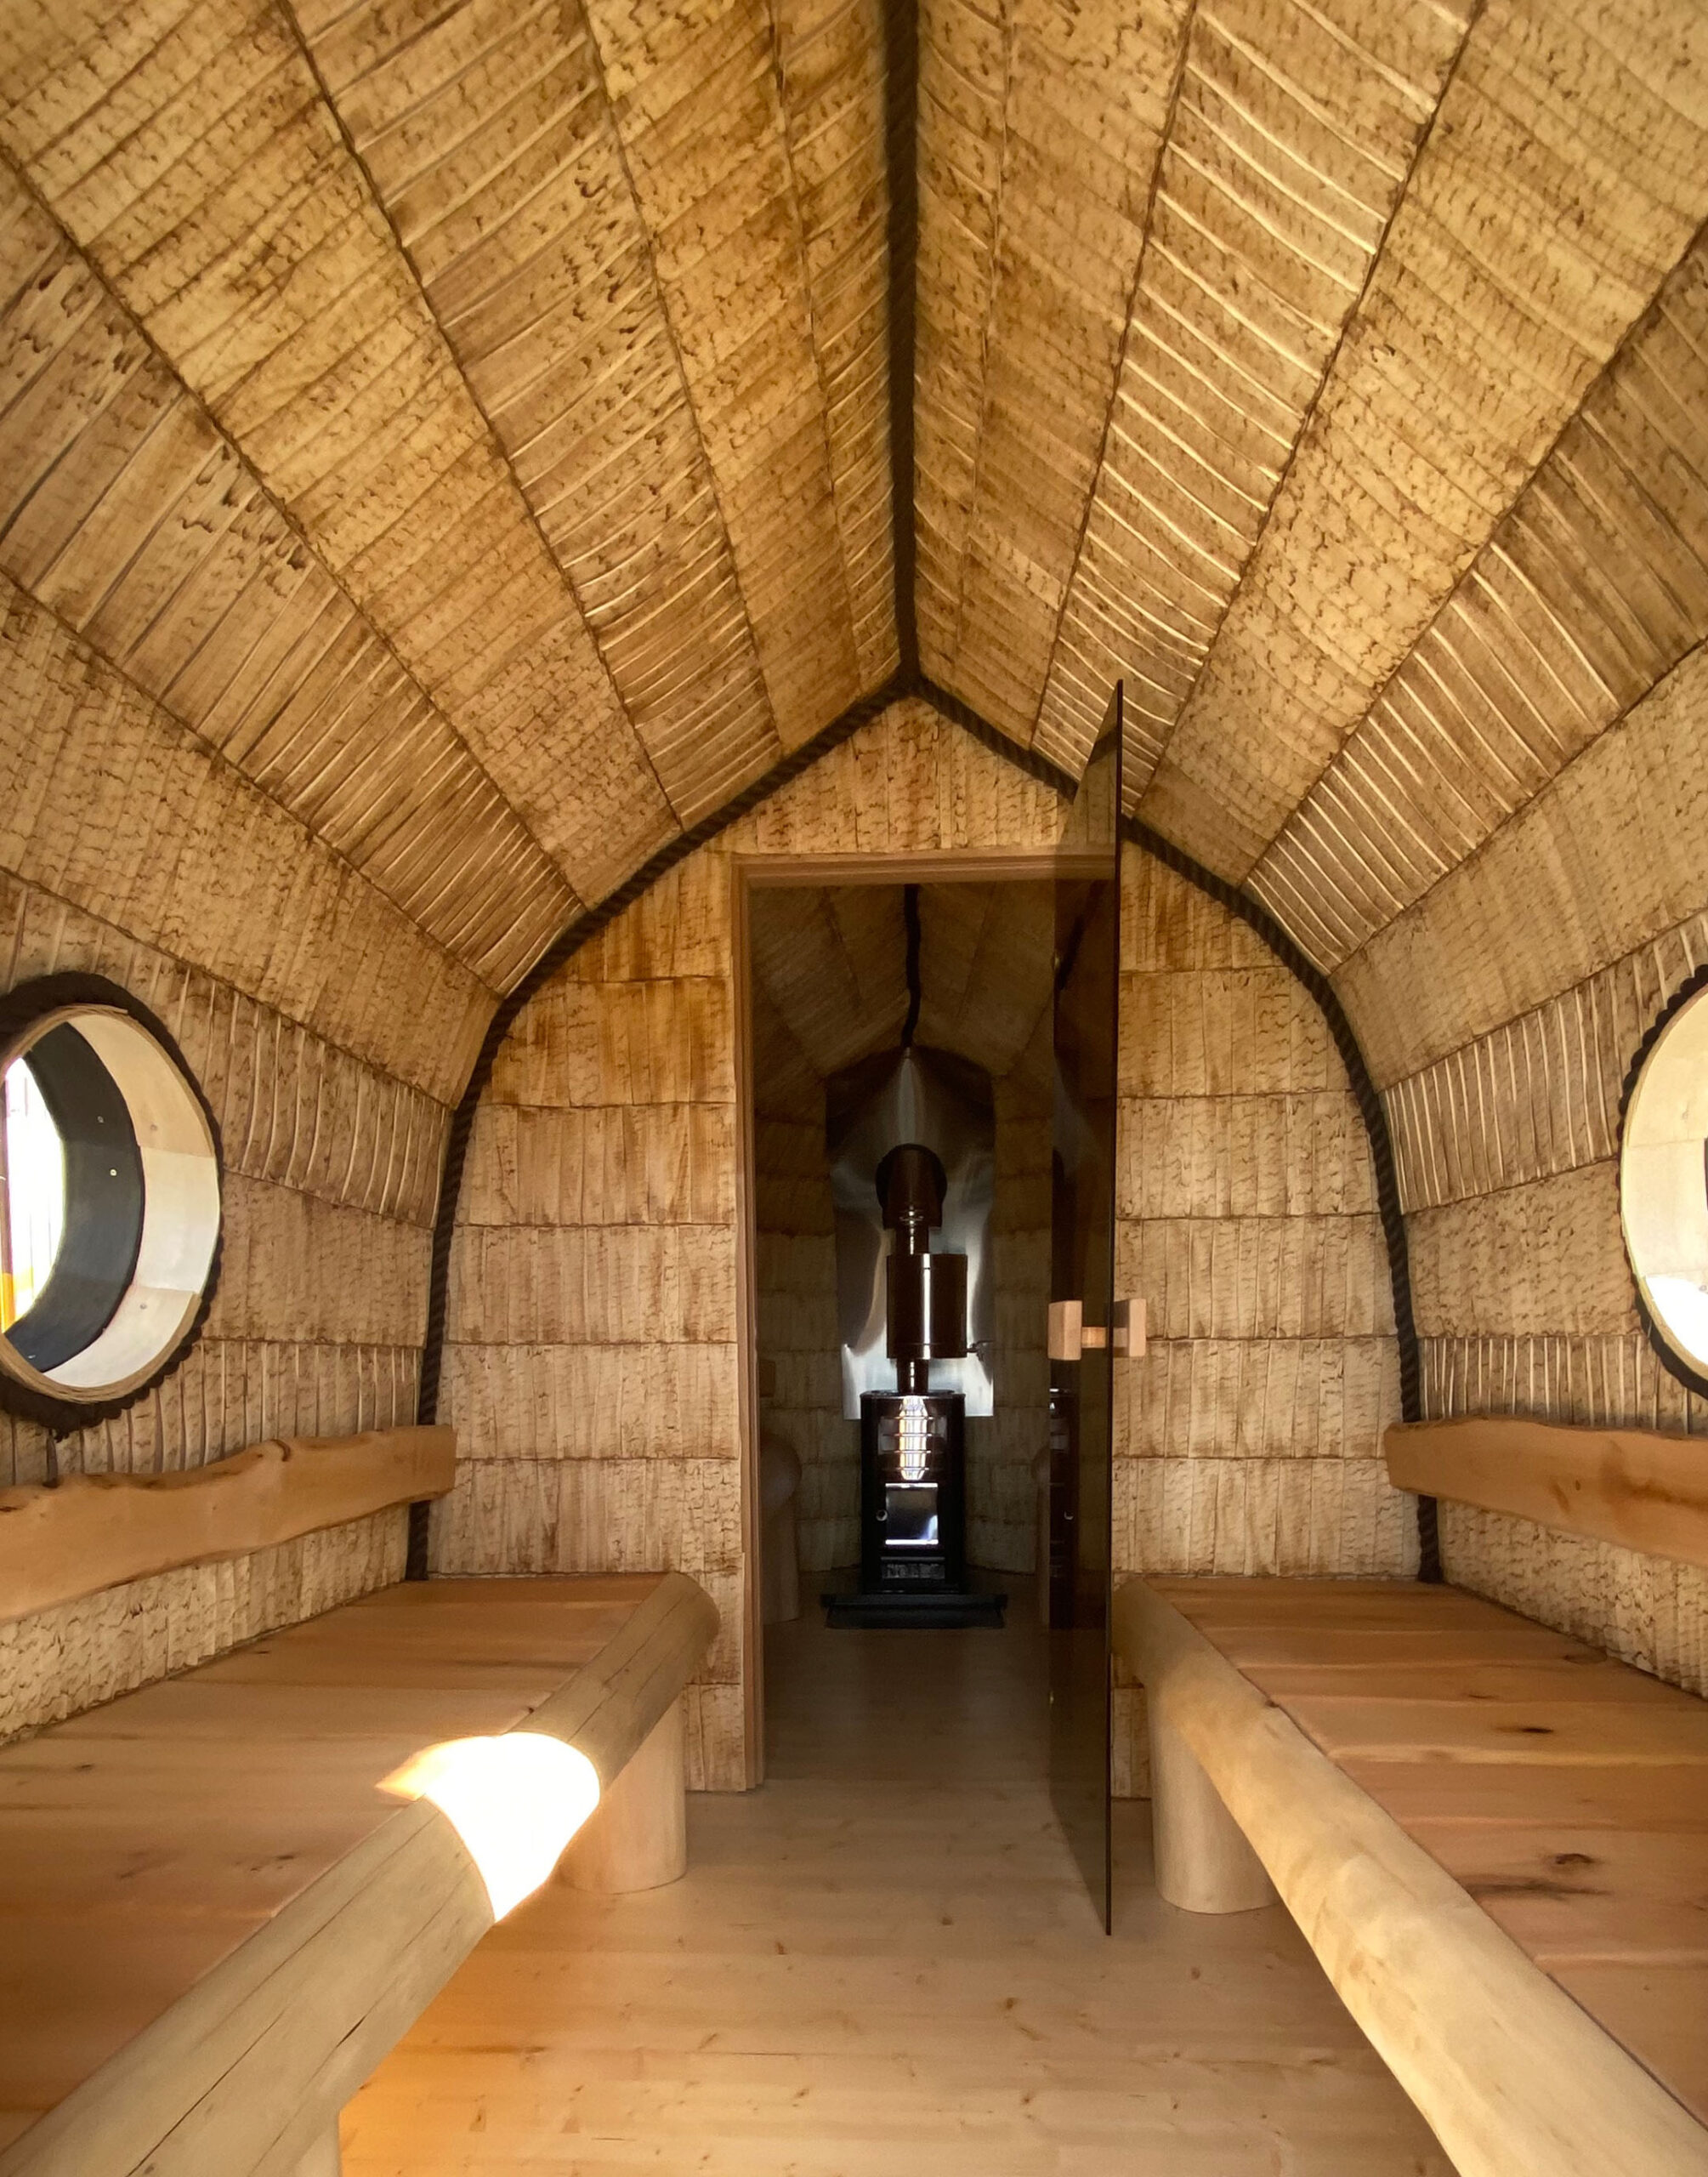 https://www.boatsauna.com/wp-content/uploads/2020/12/keskmine-saun-seest-scaled.jpg